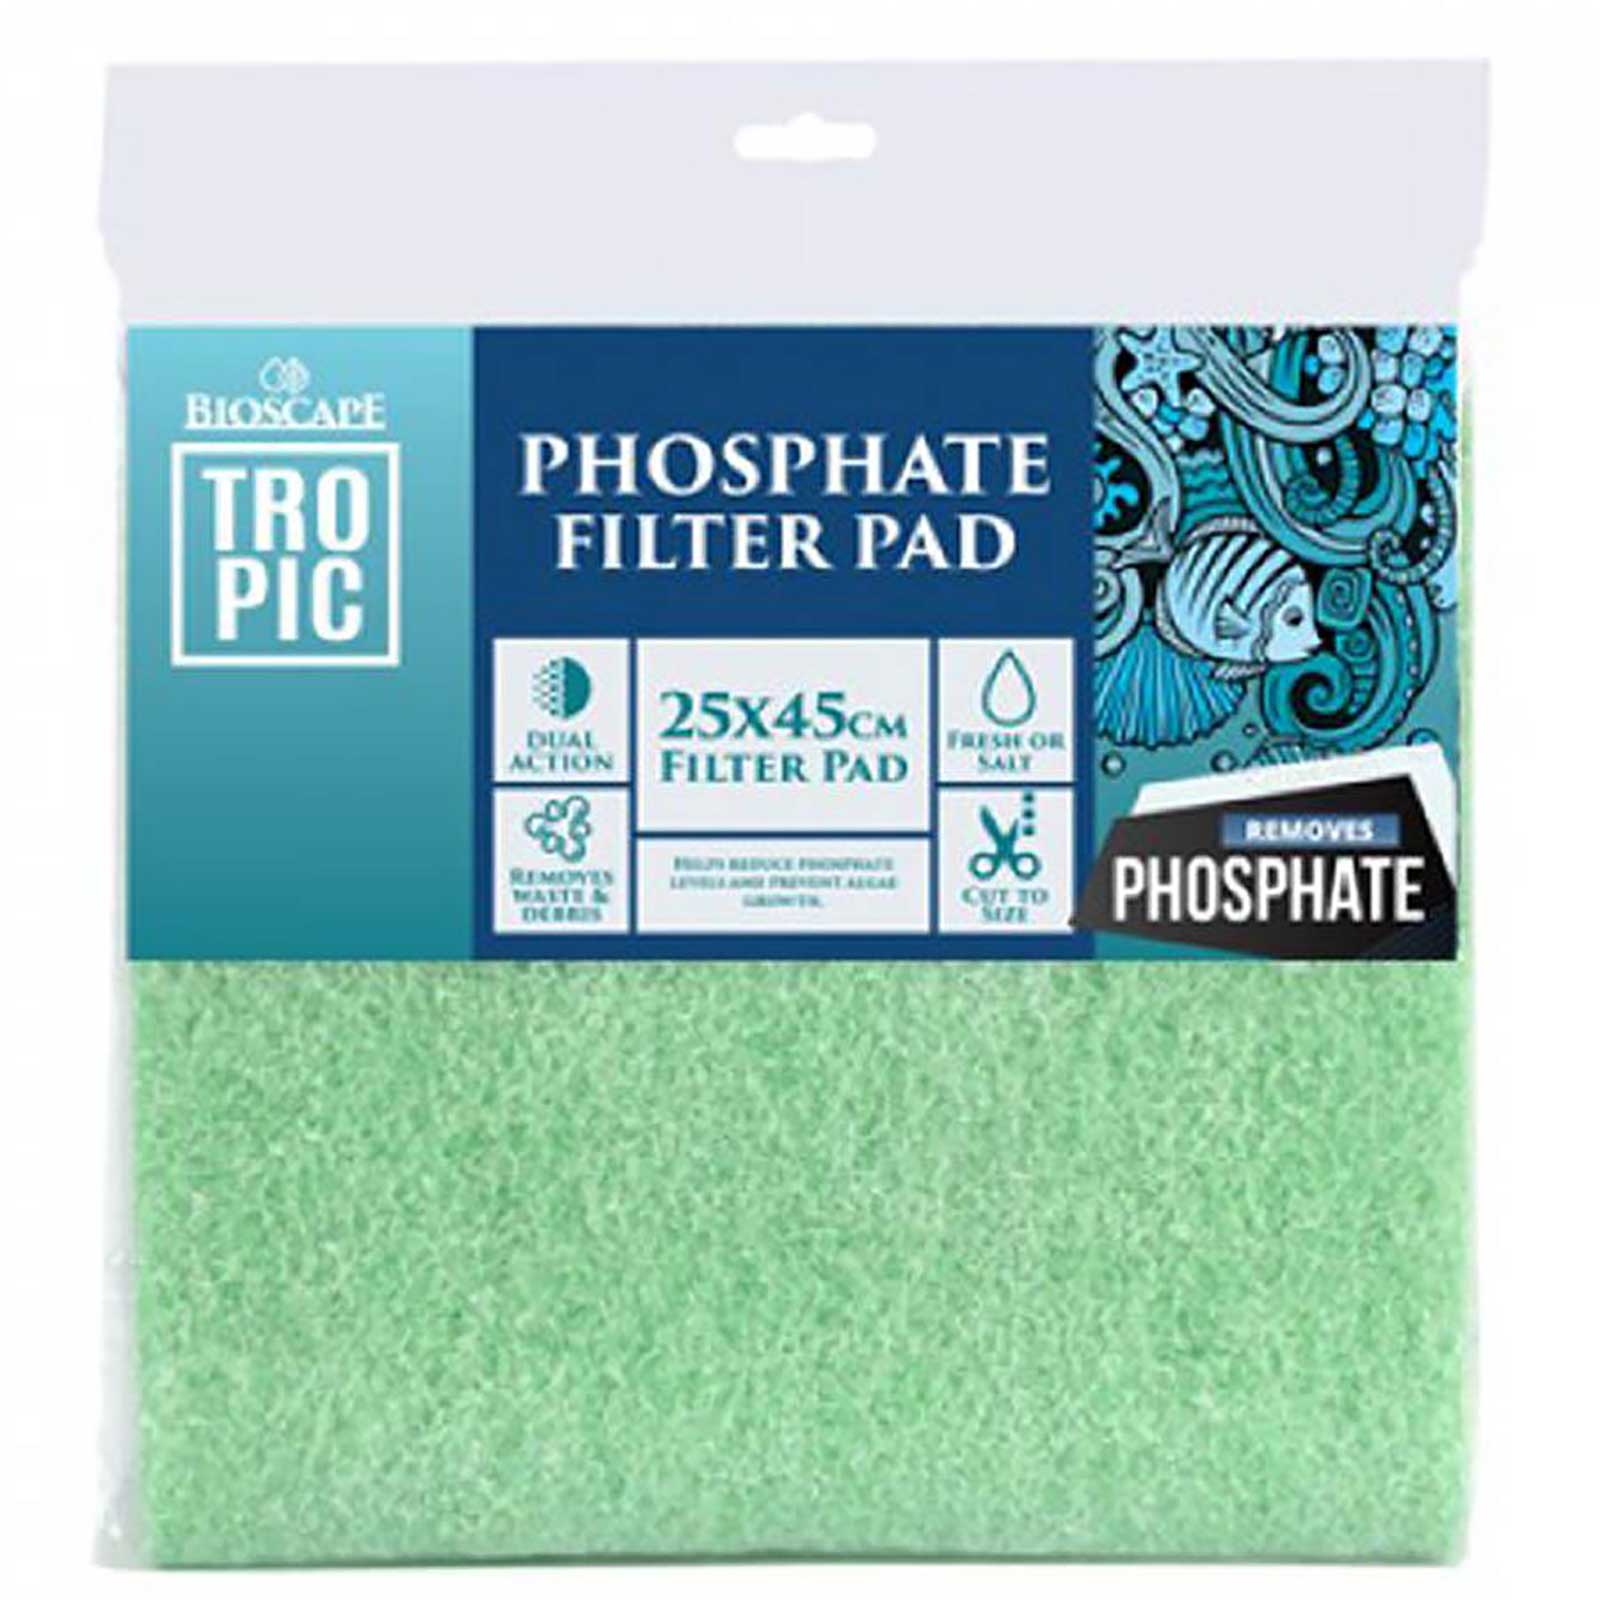 Bioscape Phosphate Filter Pad